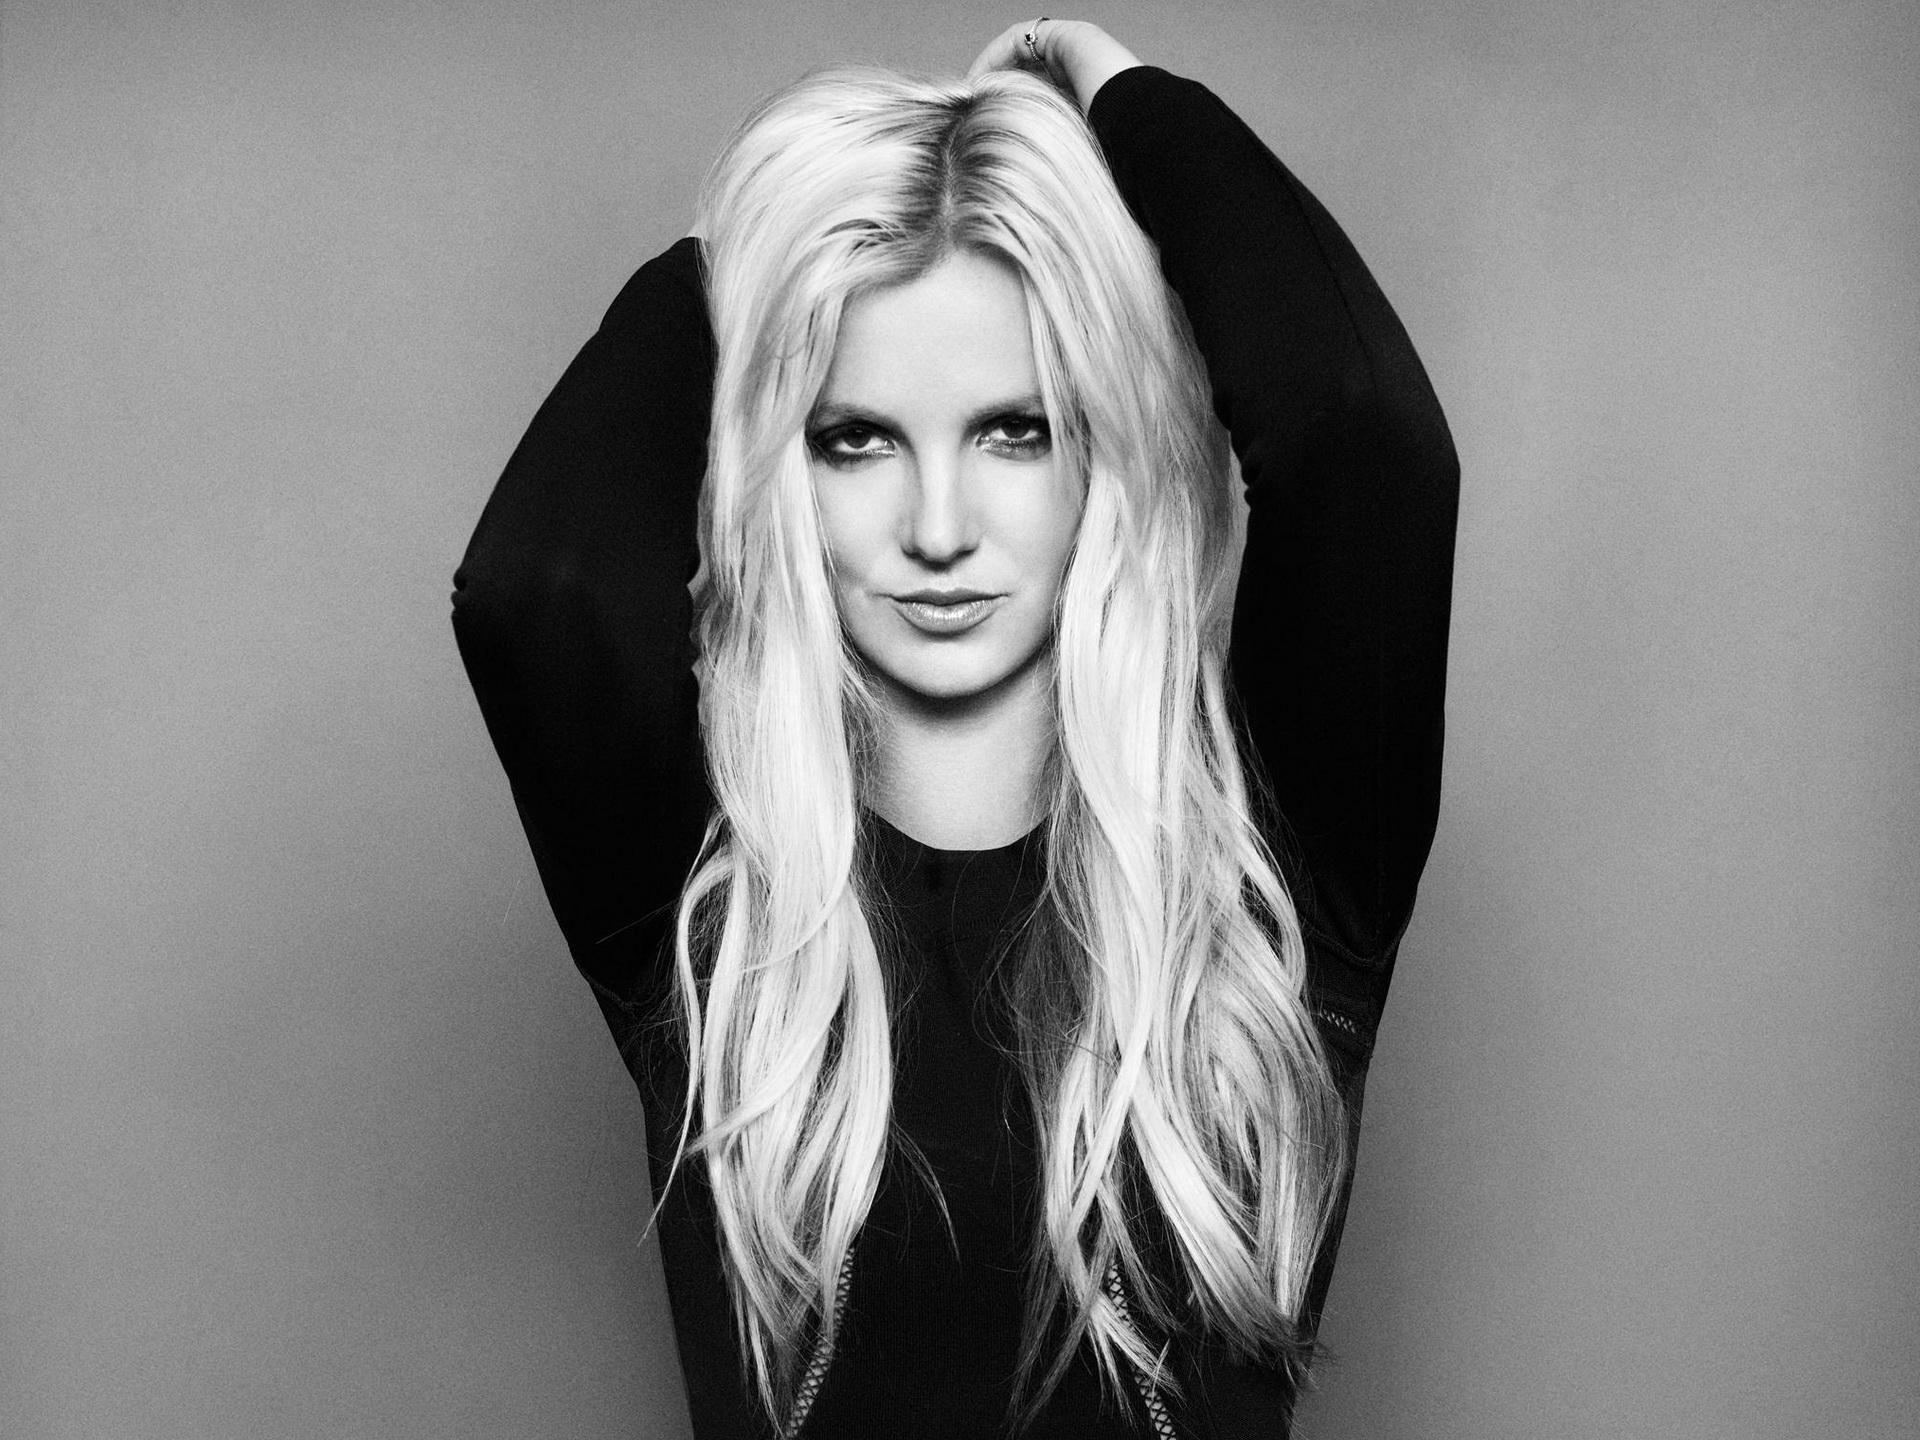 Britney Spears Wallpaper.com Wallpaper